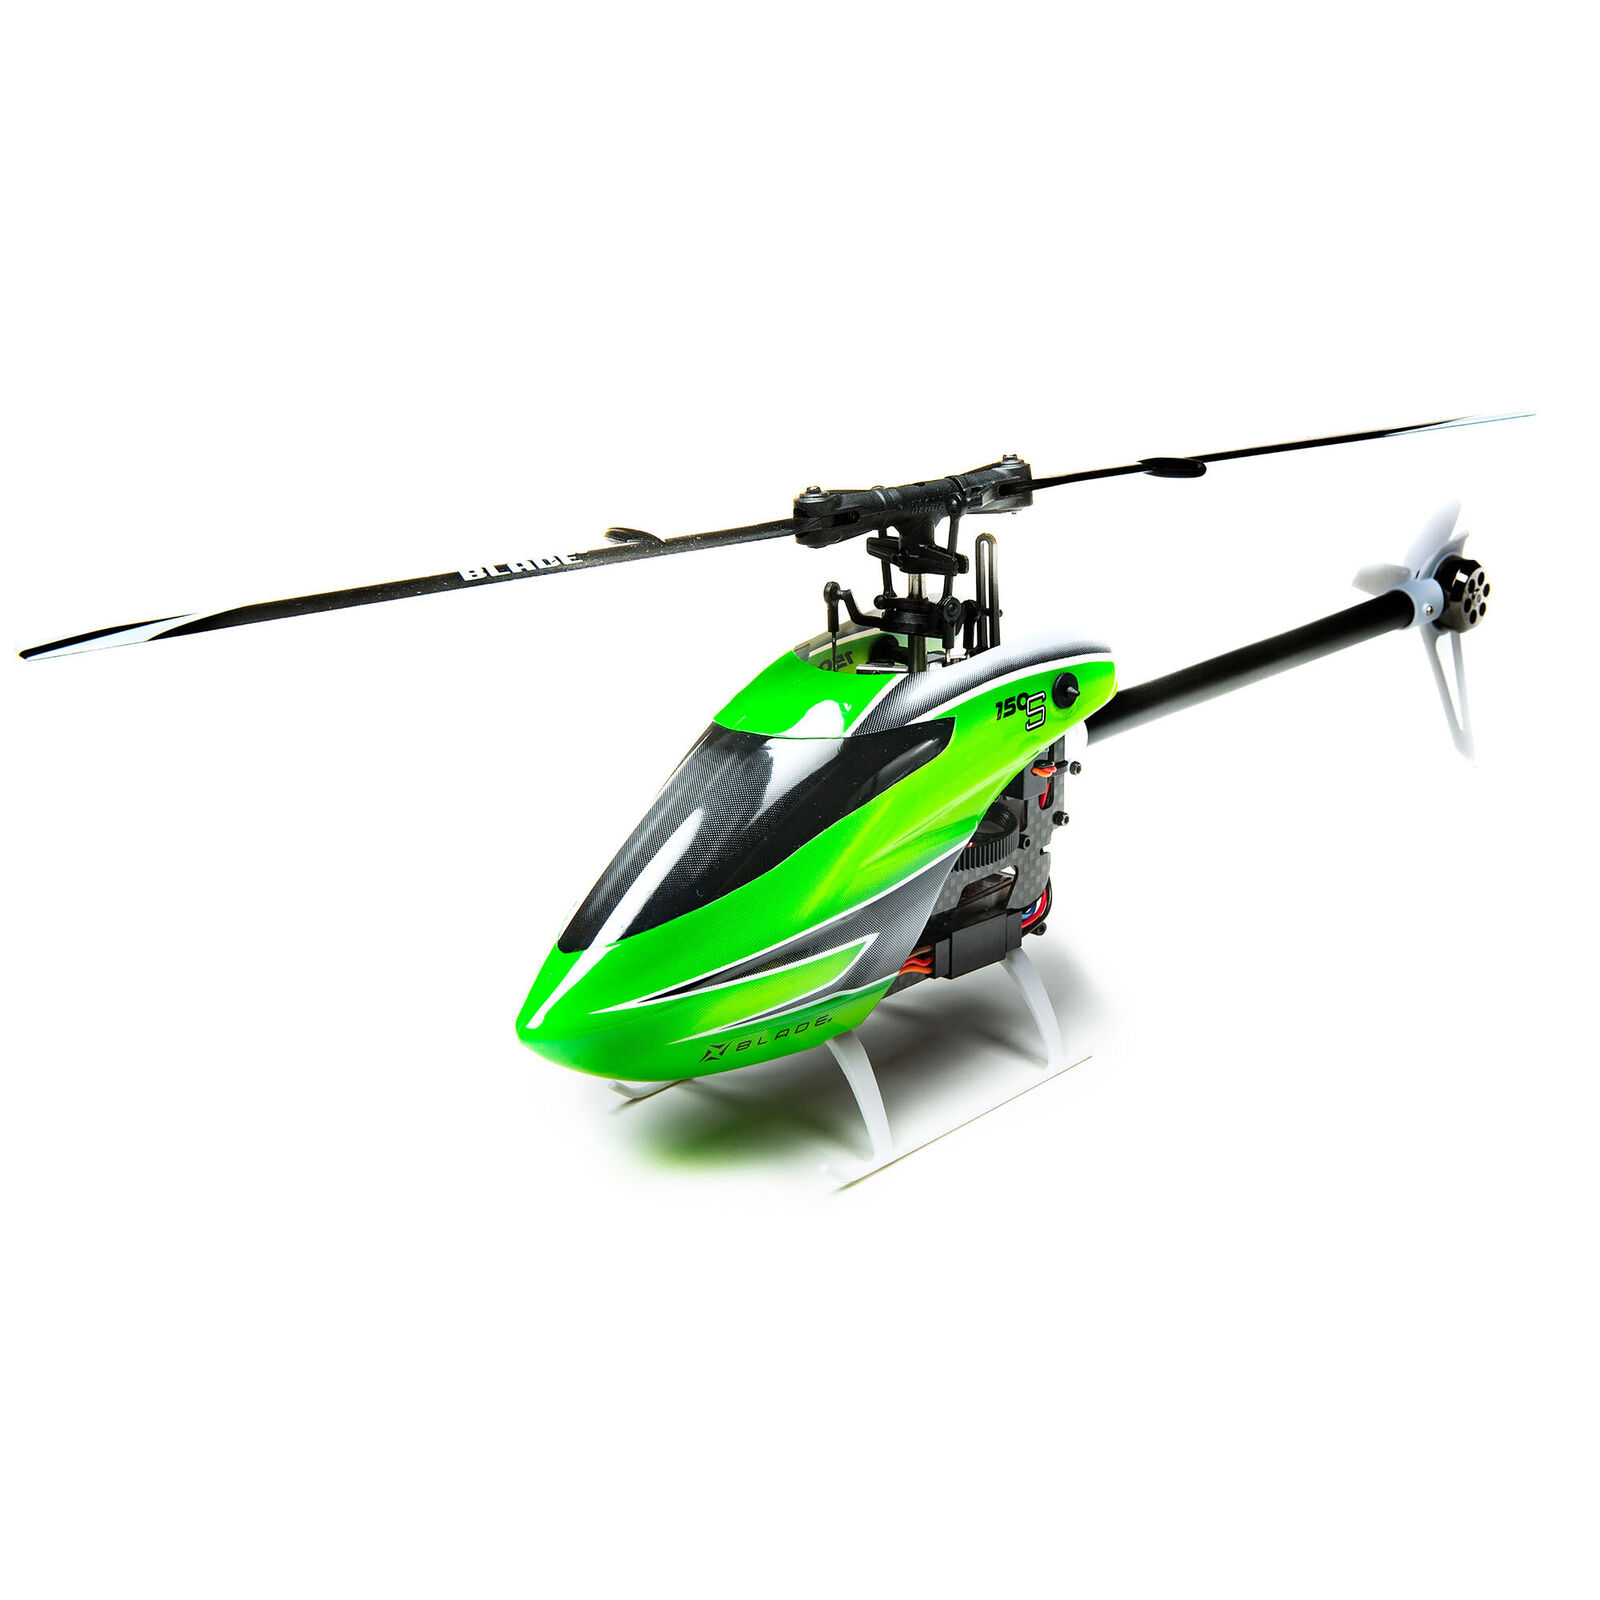 Horizon Hobby Blade 150S Smart Intermediate 3D Helicopter BLH54550